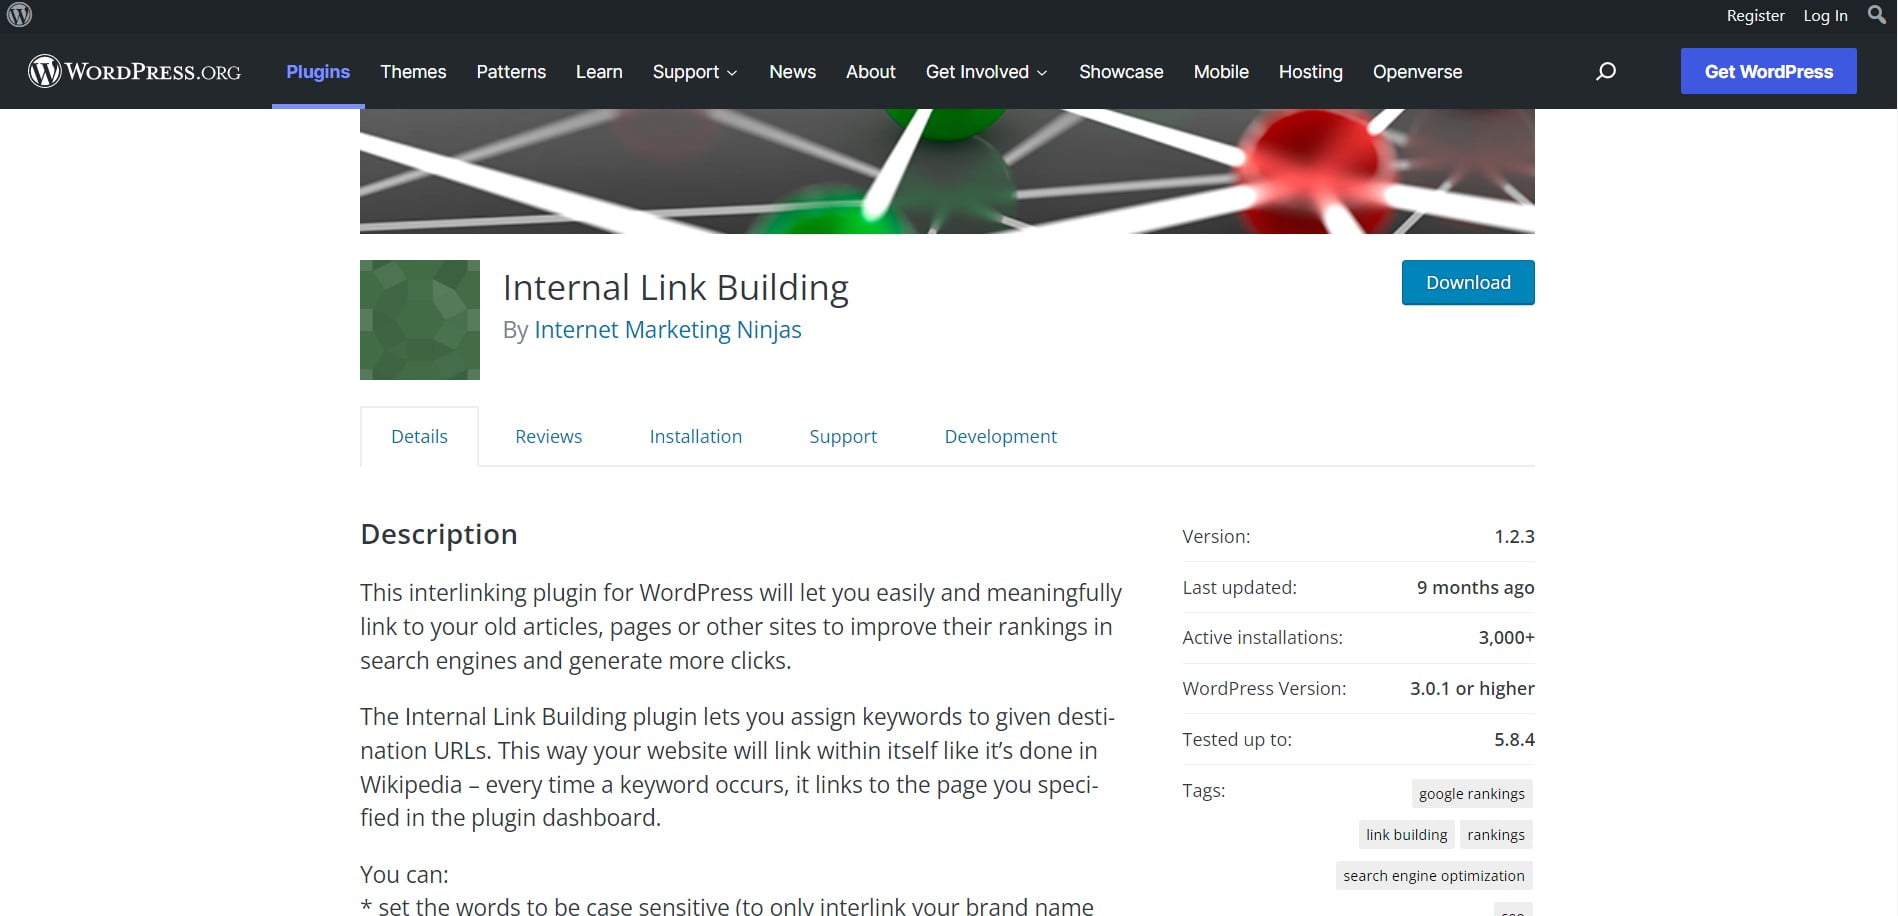 Internal Link Building
